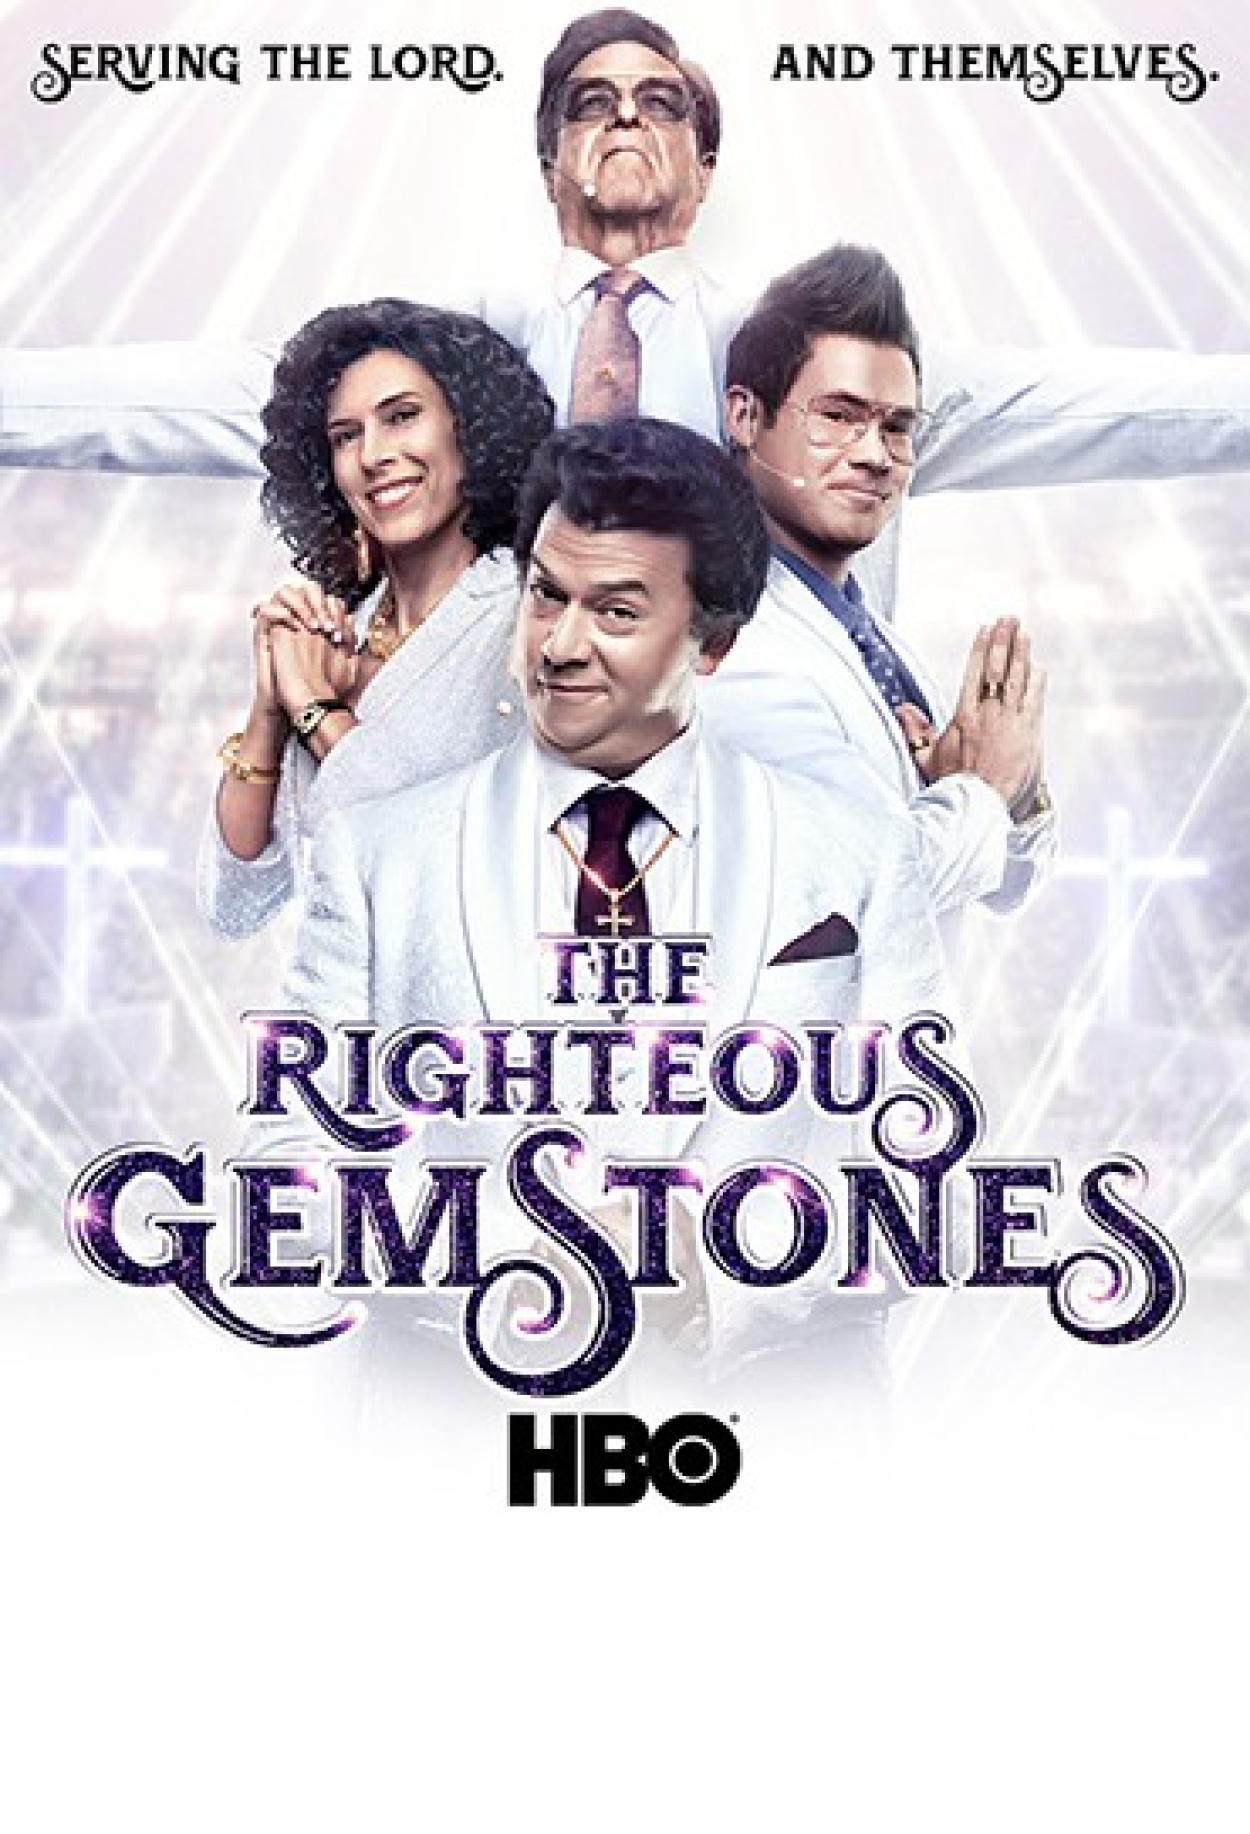 The Righteous Gemstones: Série da HBO ri de família disfuncional e  gananciosa de pastores - 18/08/2019 - UOL Entretenimento